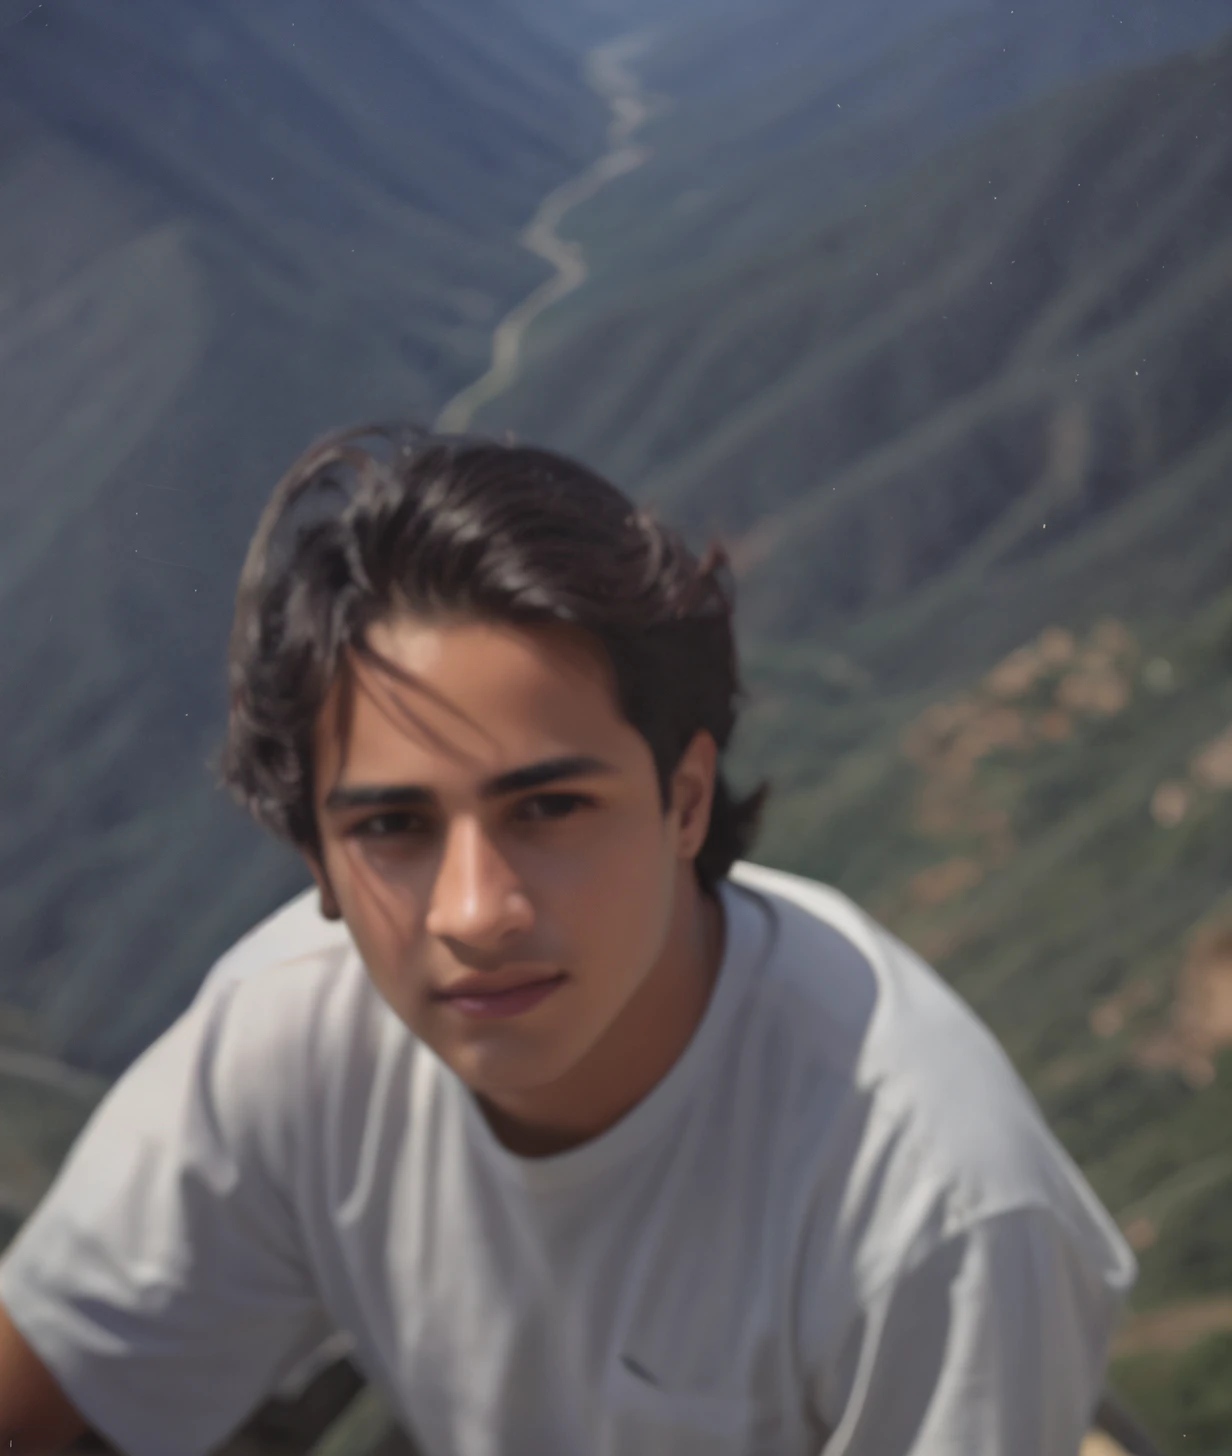 Adolescente sentados บนยอดเขา com vista para o vale, บนภูเขา, บนยอดเขา, บนภูเขา, บนยอดเขา, บนยอดเขา, ในภูเขา, ถ่ายเมื่อต้นปี 2000, บนหน้าผา, ประมาณ 17 ปี, มีตาสีน้ำตาล, ภาพถ่ายที่สมจริงมาก, รูปภาพที่โฟกัส, สวมเสื้อเชิ้ตสีขาว, ไม่เป็นทางการ